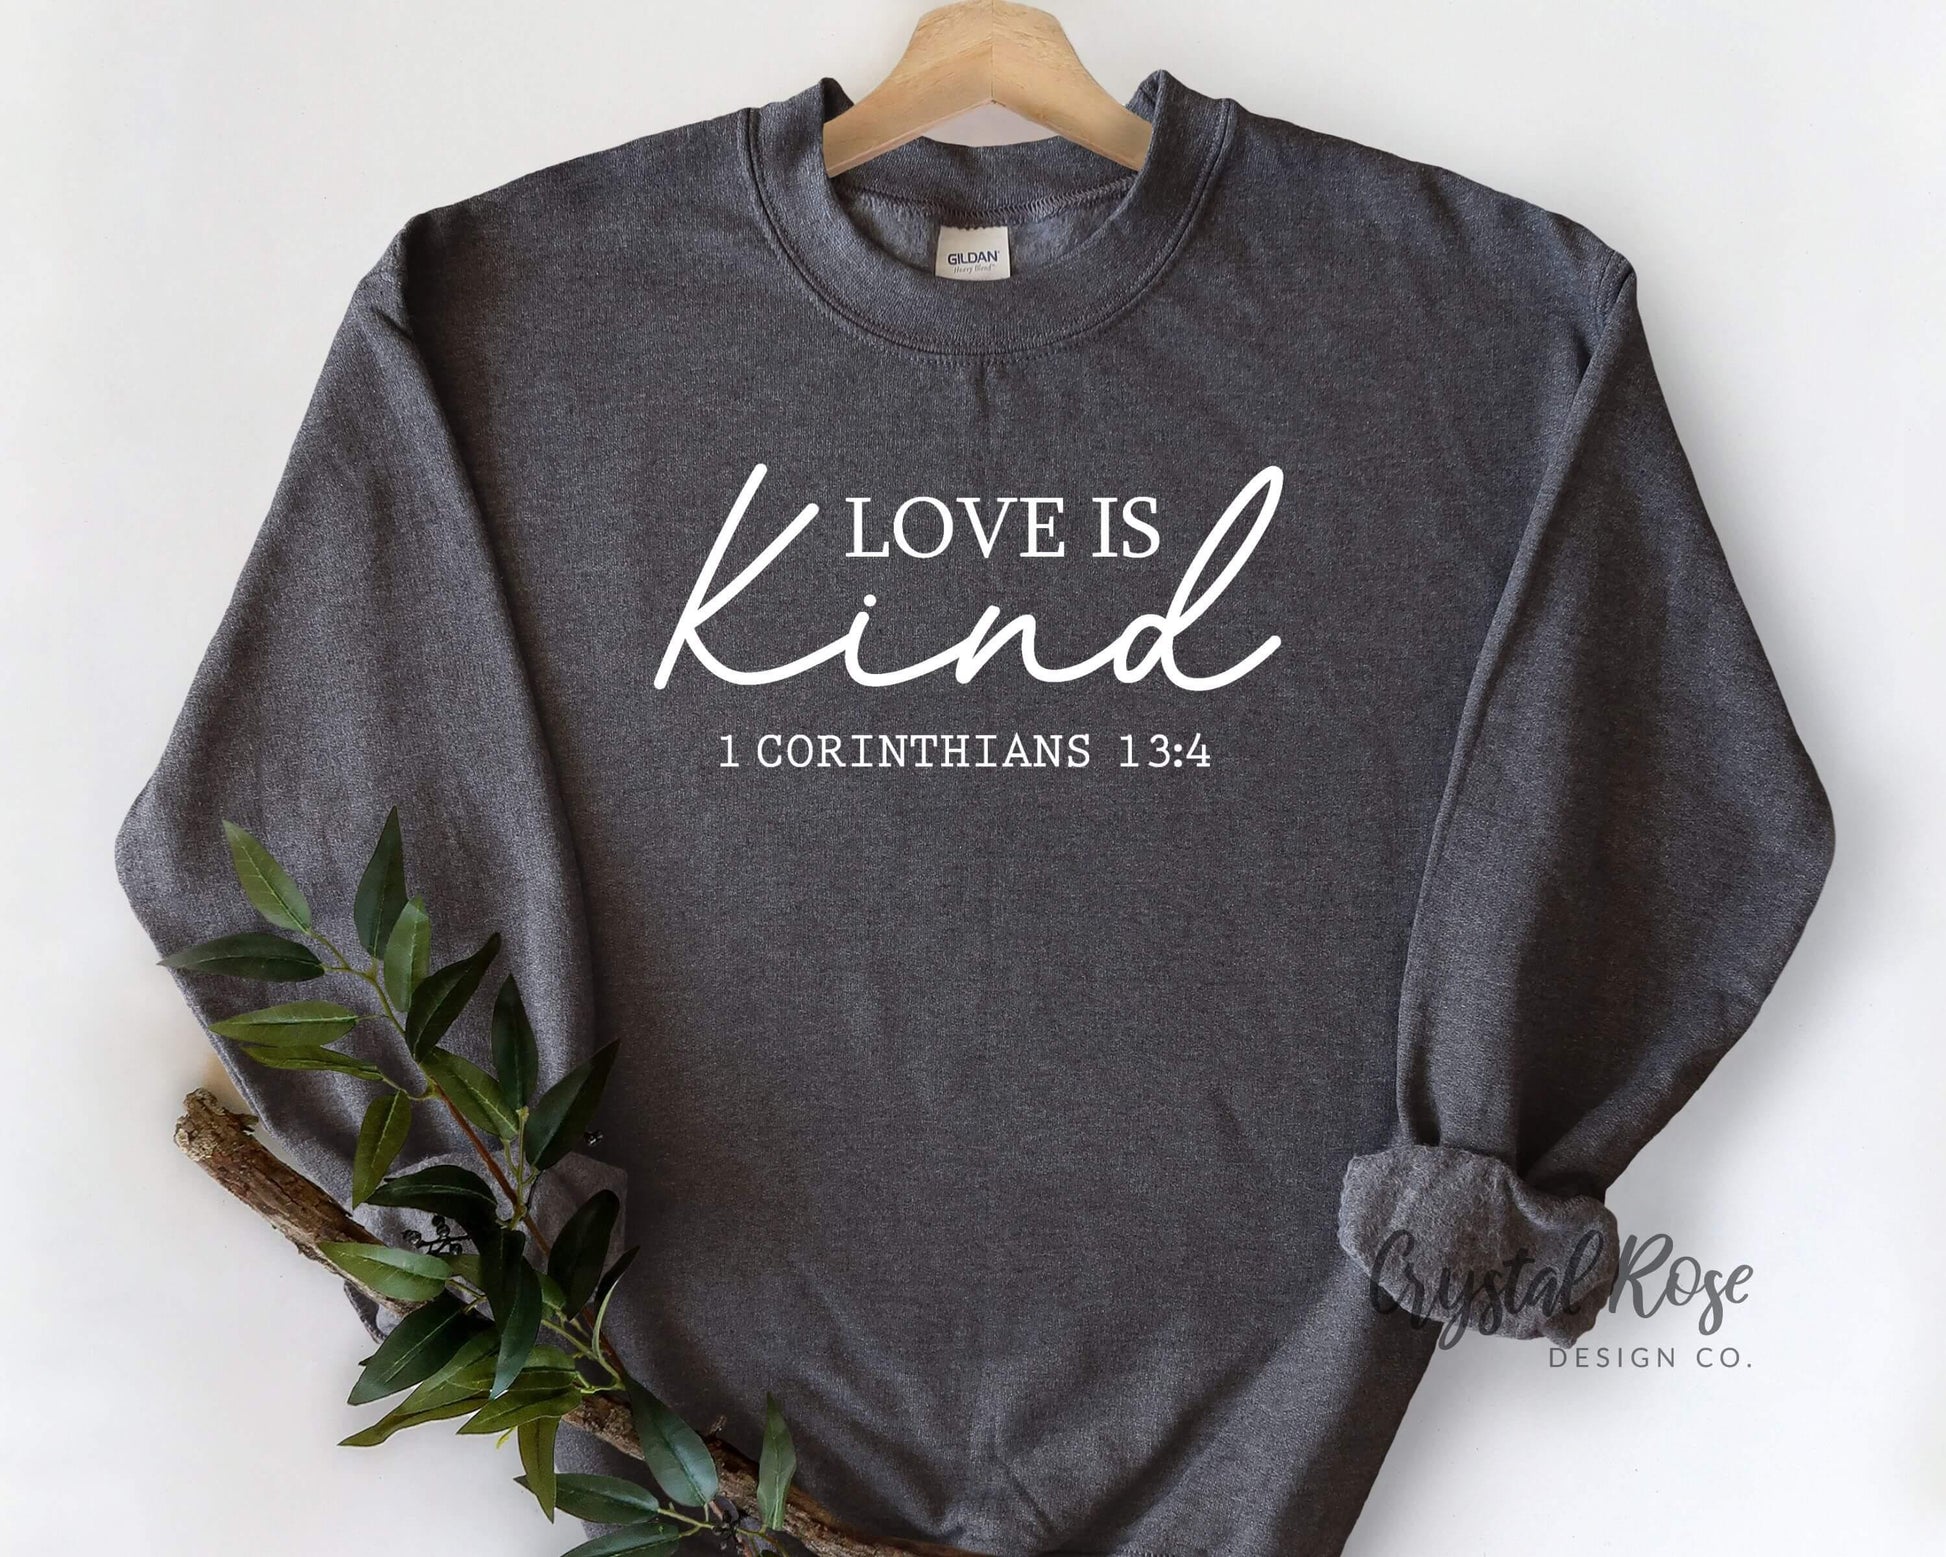 Love is Kind Crewneck Sweatshirt - Crystal Rose Design Co.